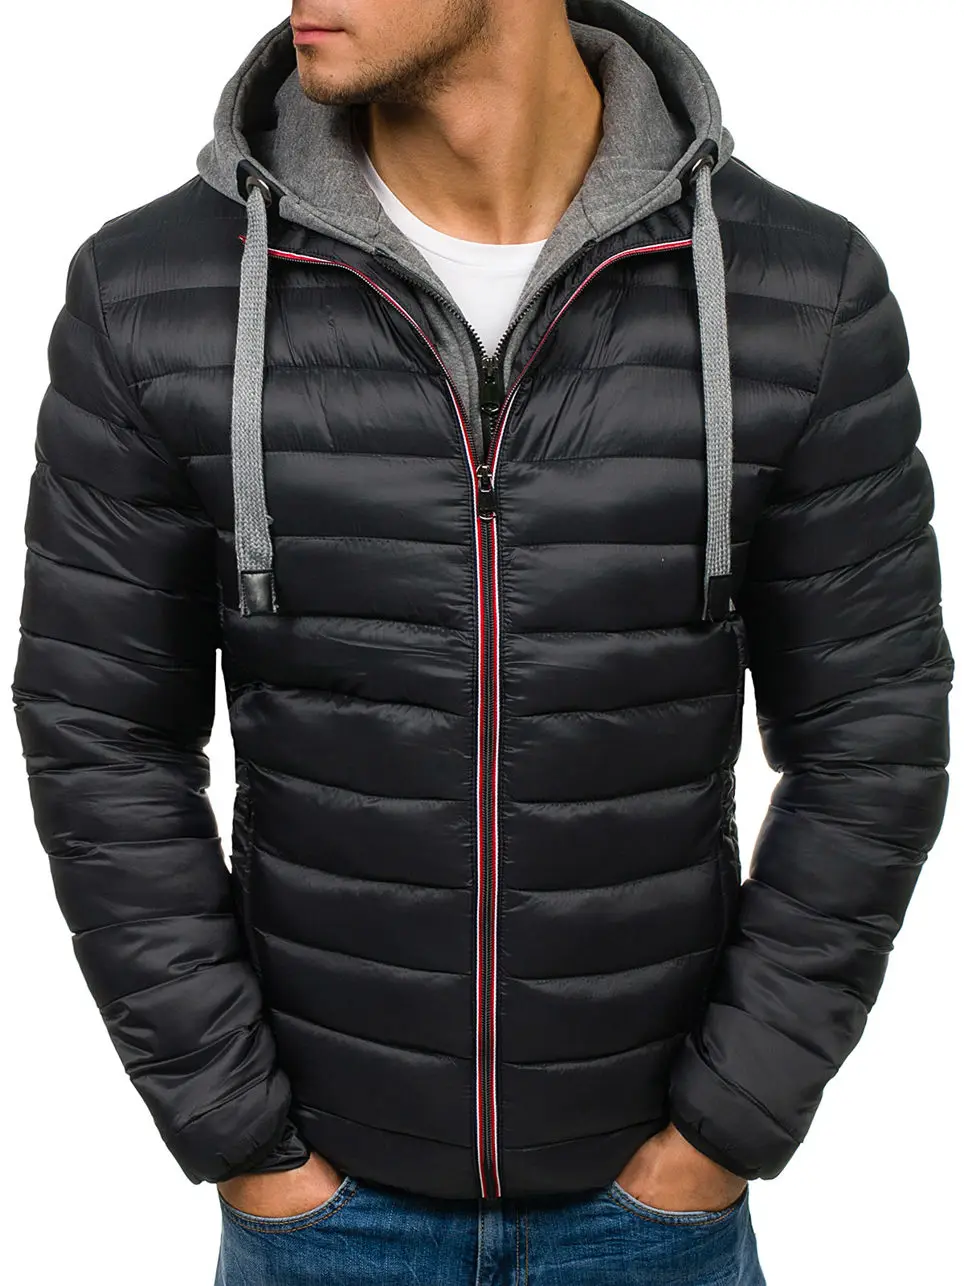 ZOGAA зимняя куртка мужская одежда новая брендовая парка с капюшоном хлопковое пальто Мужская теплая куртка Модные пальто размера плюс - Цвет: black